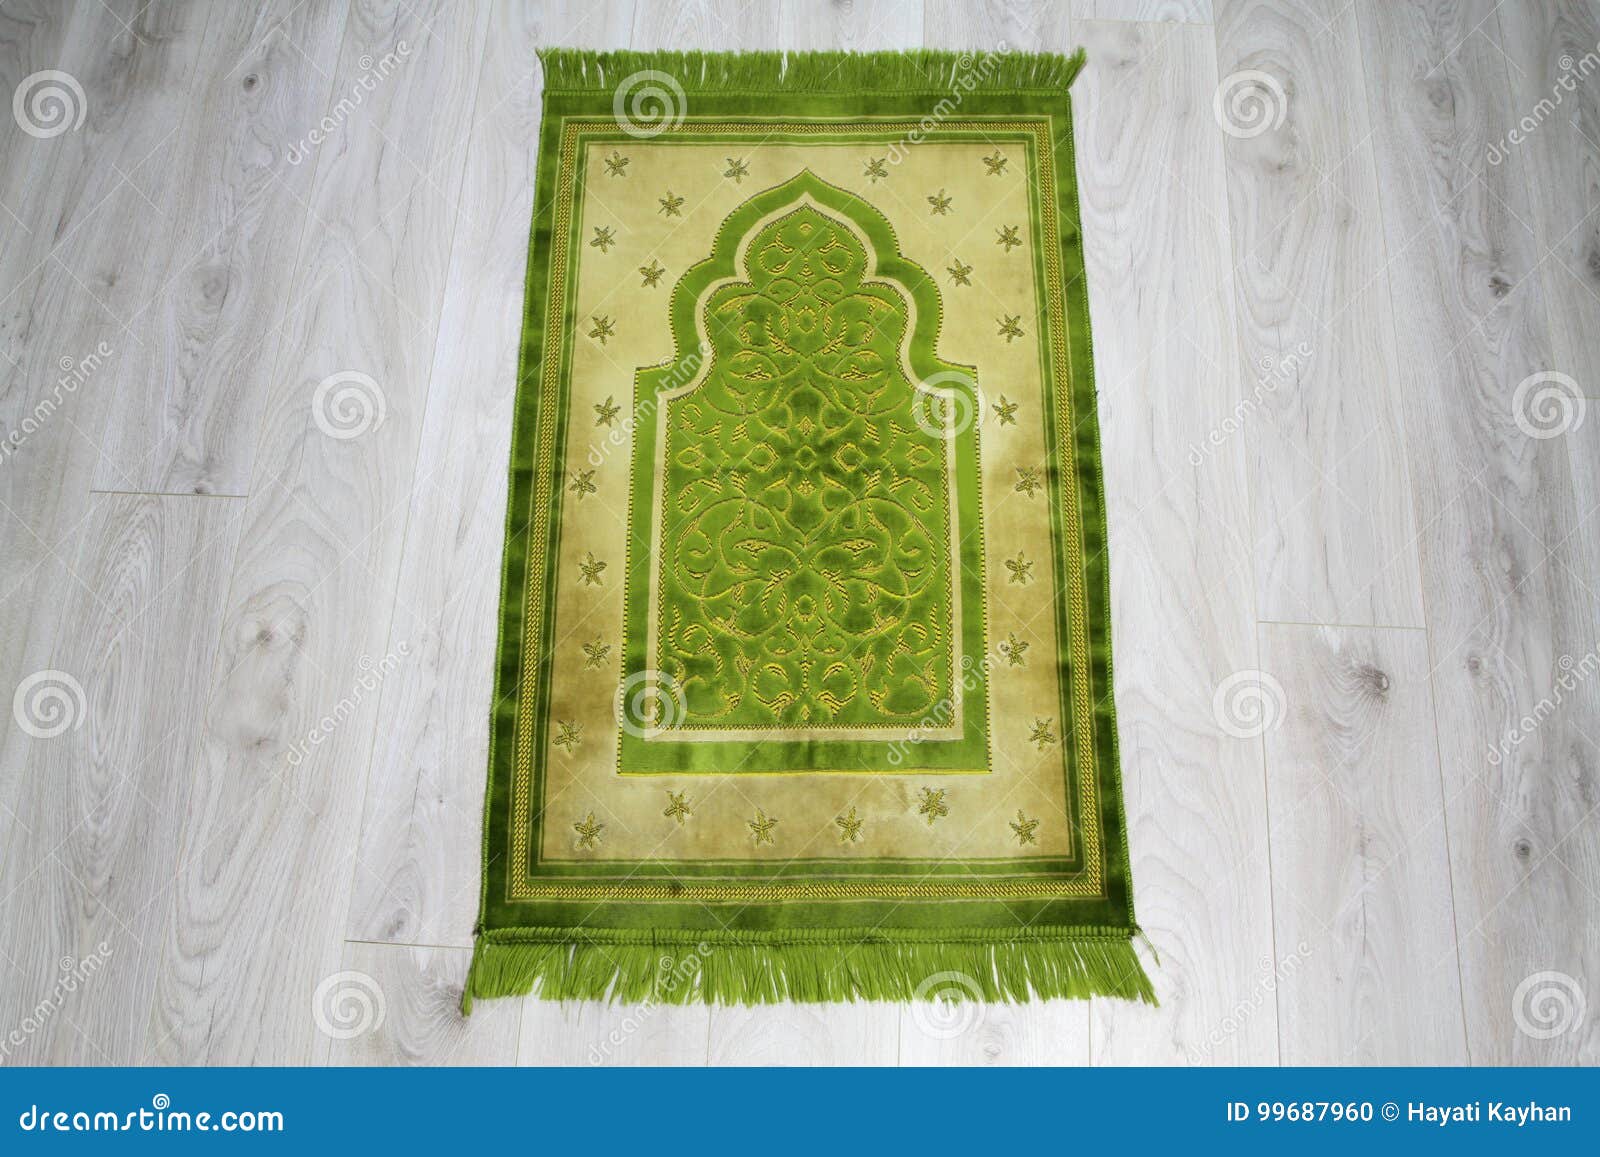 prayer rug for muslims.